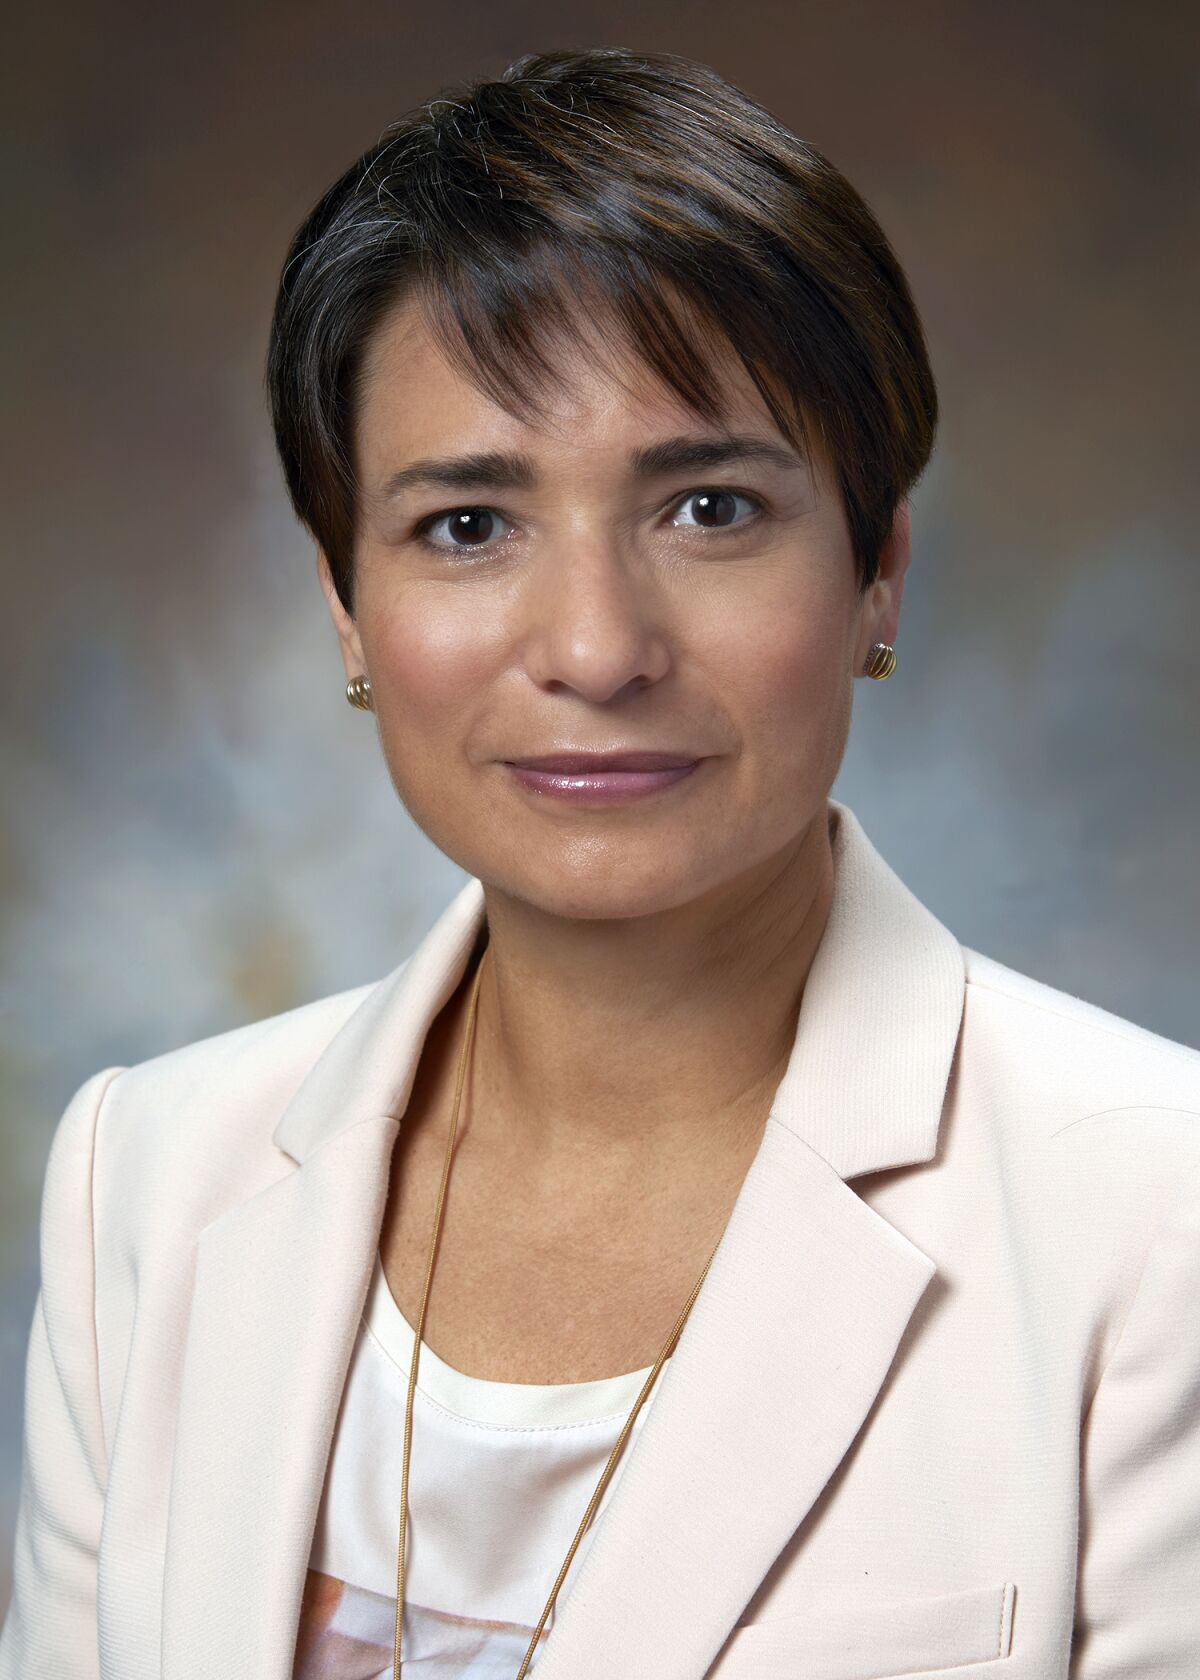 Dr. Maria Rivas